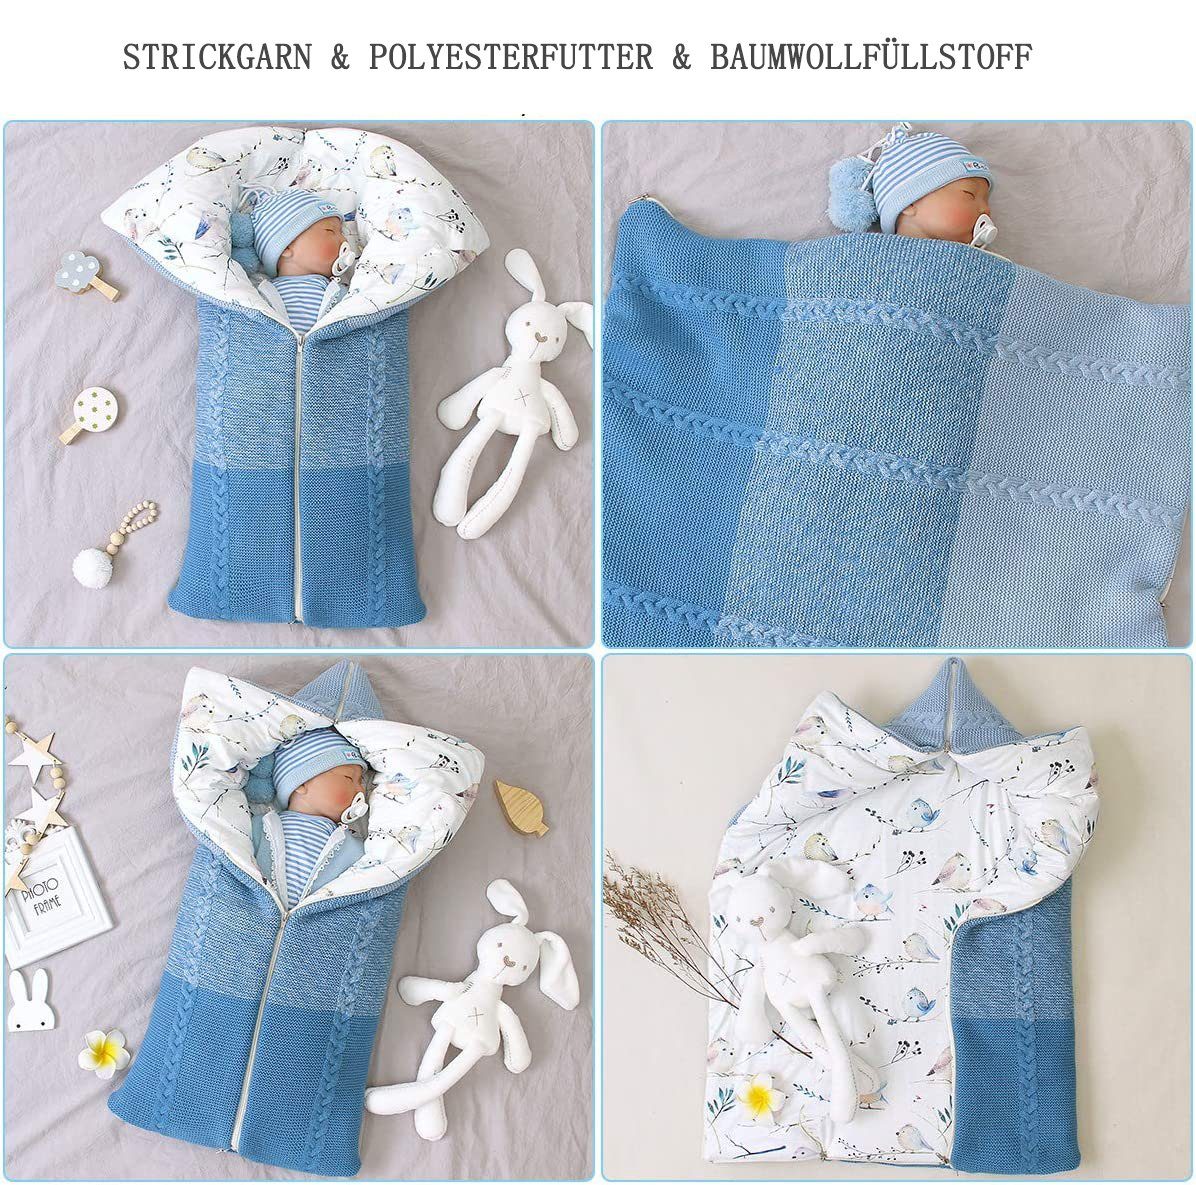 Babydecke Neugeborenen Kinderwagen Multifunktional blau Decke, Wickeldecke, Schlafsack Juoungle